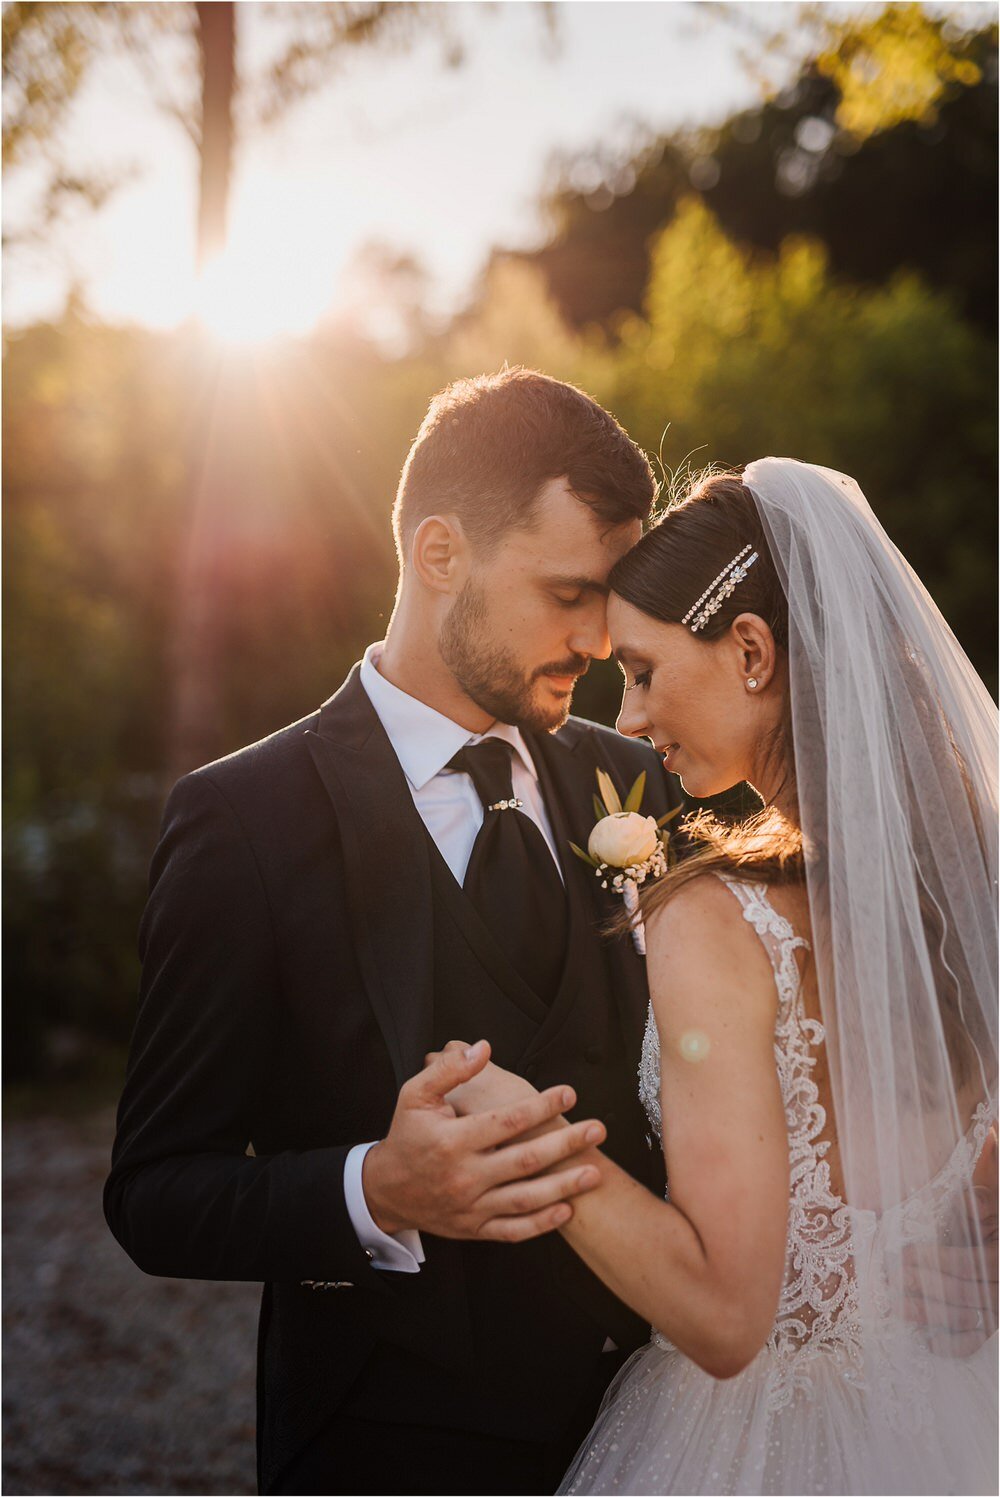 best of wedding photography 2019 photographer italy ireland tuscany santorini greece spain barcelona lake como chateux scotland destination wedding 0079.jpg